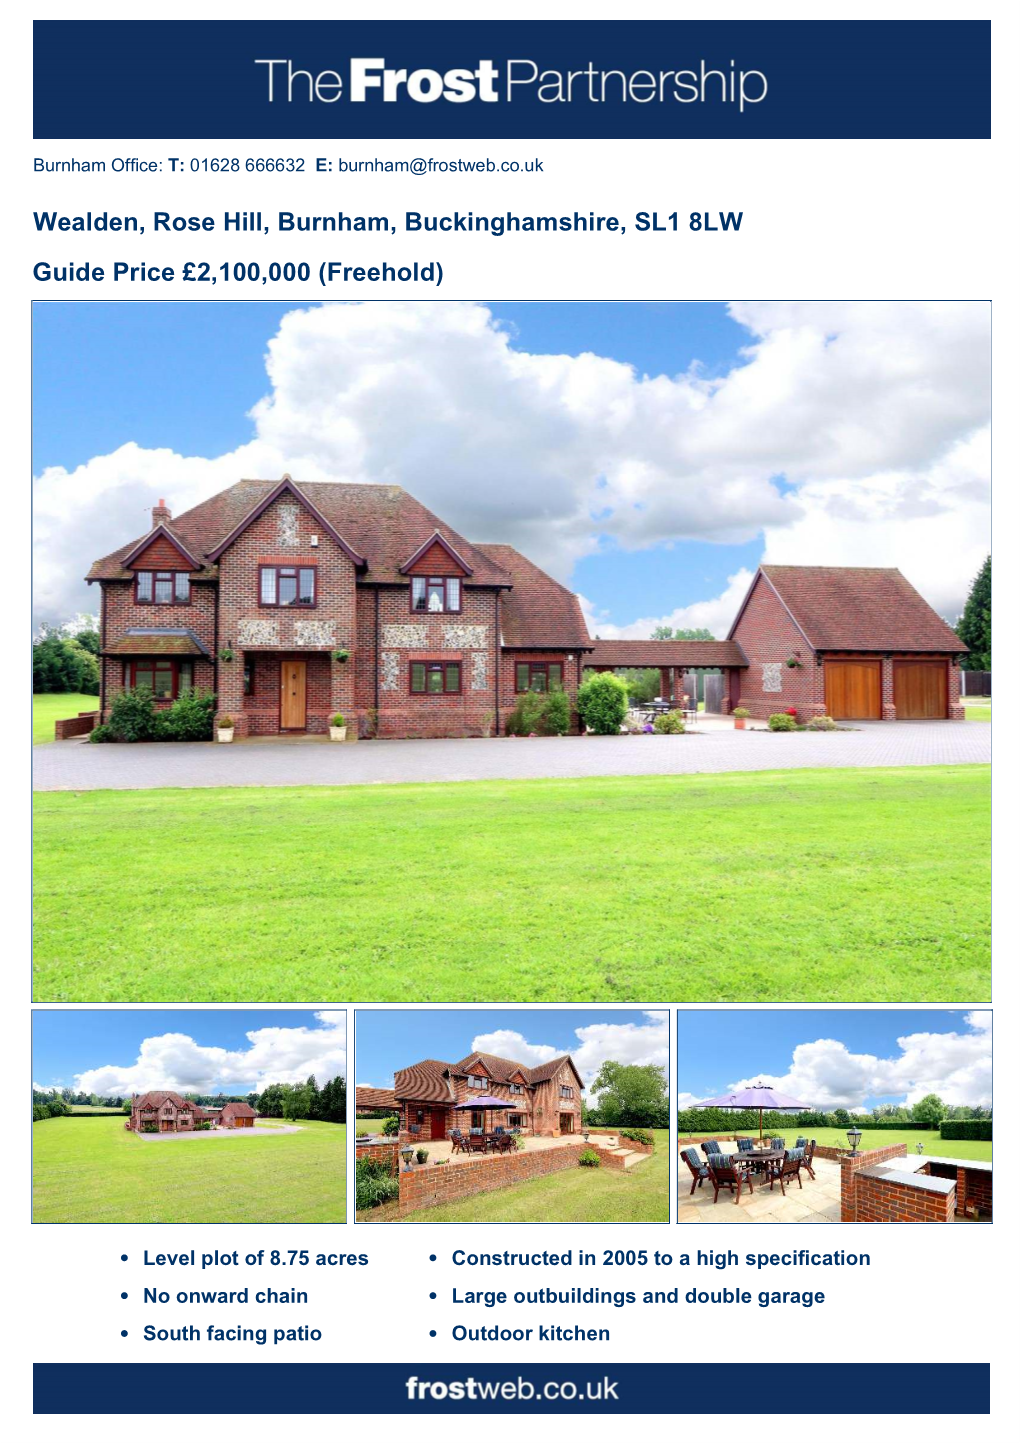 Wealden, Rose Hill, Burnham, Buckinghamshire, SL1 8LW Guide Price £2100000